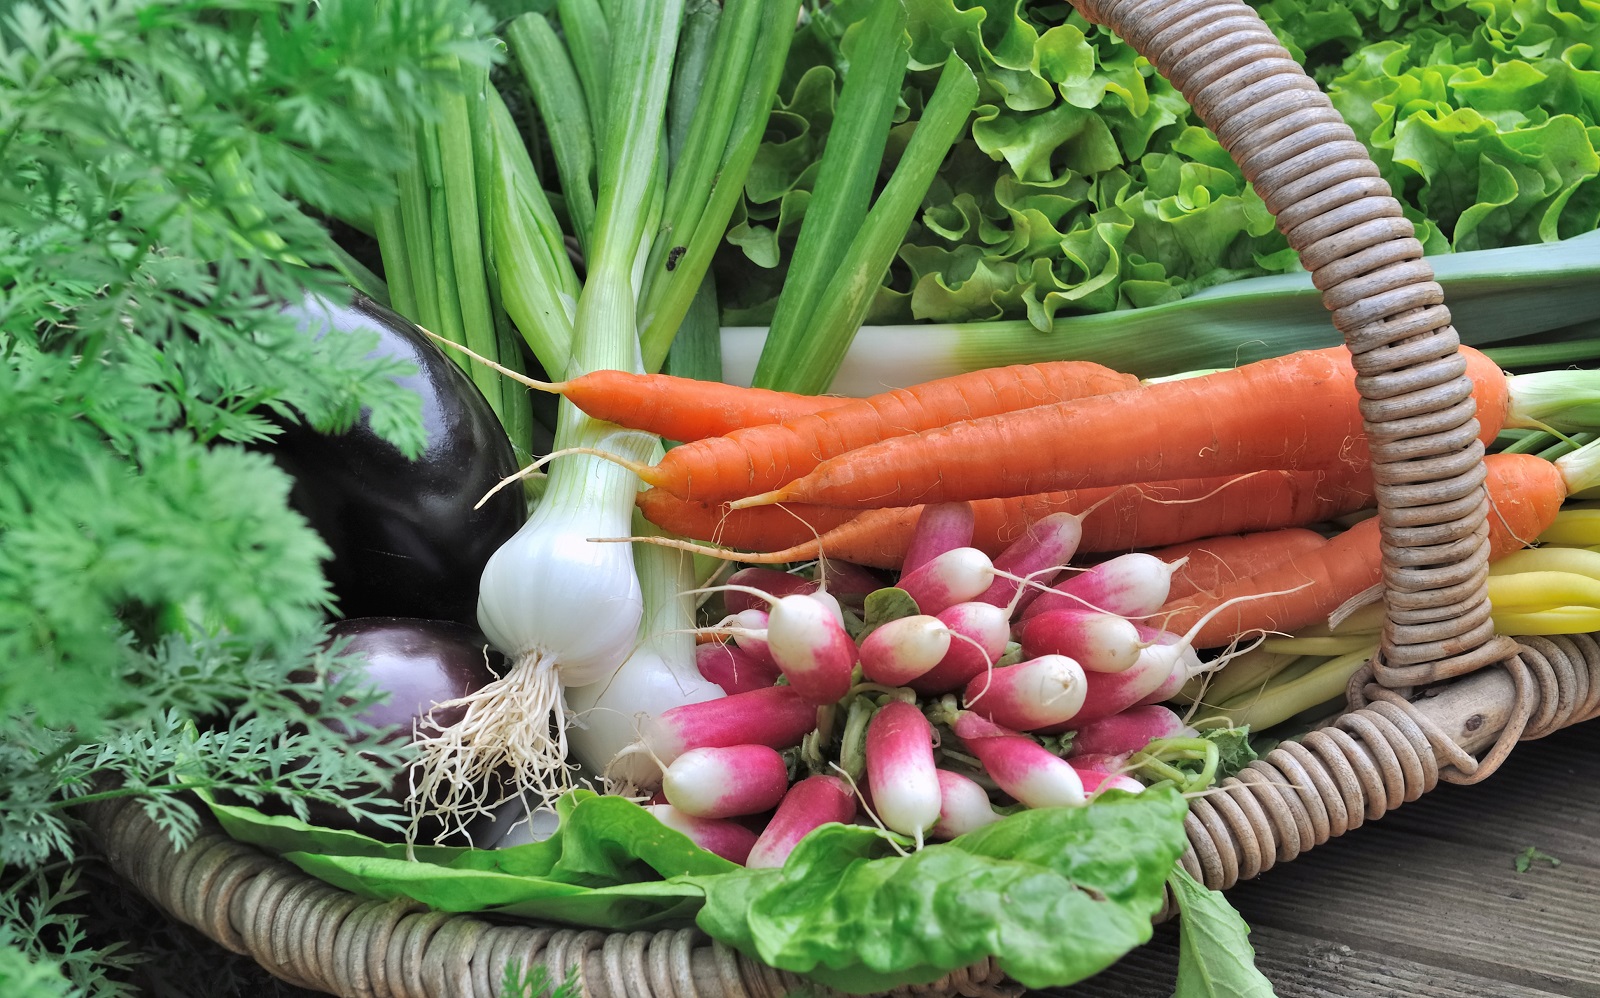 Panier de légumes primeurs : carottes, radis, petits oignons blancs et salade...&nbsp;© Coco, Adobe Stock